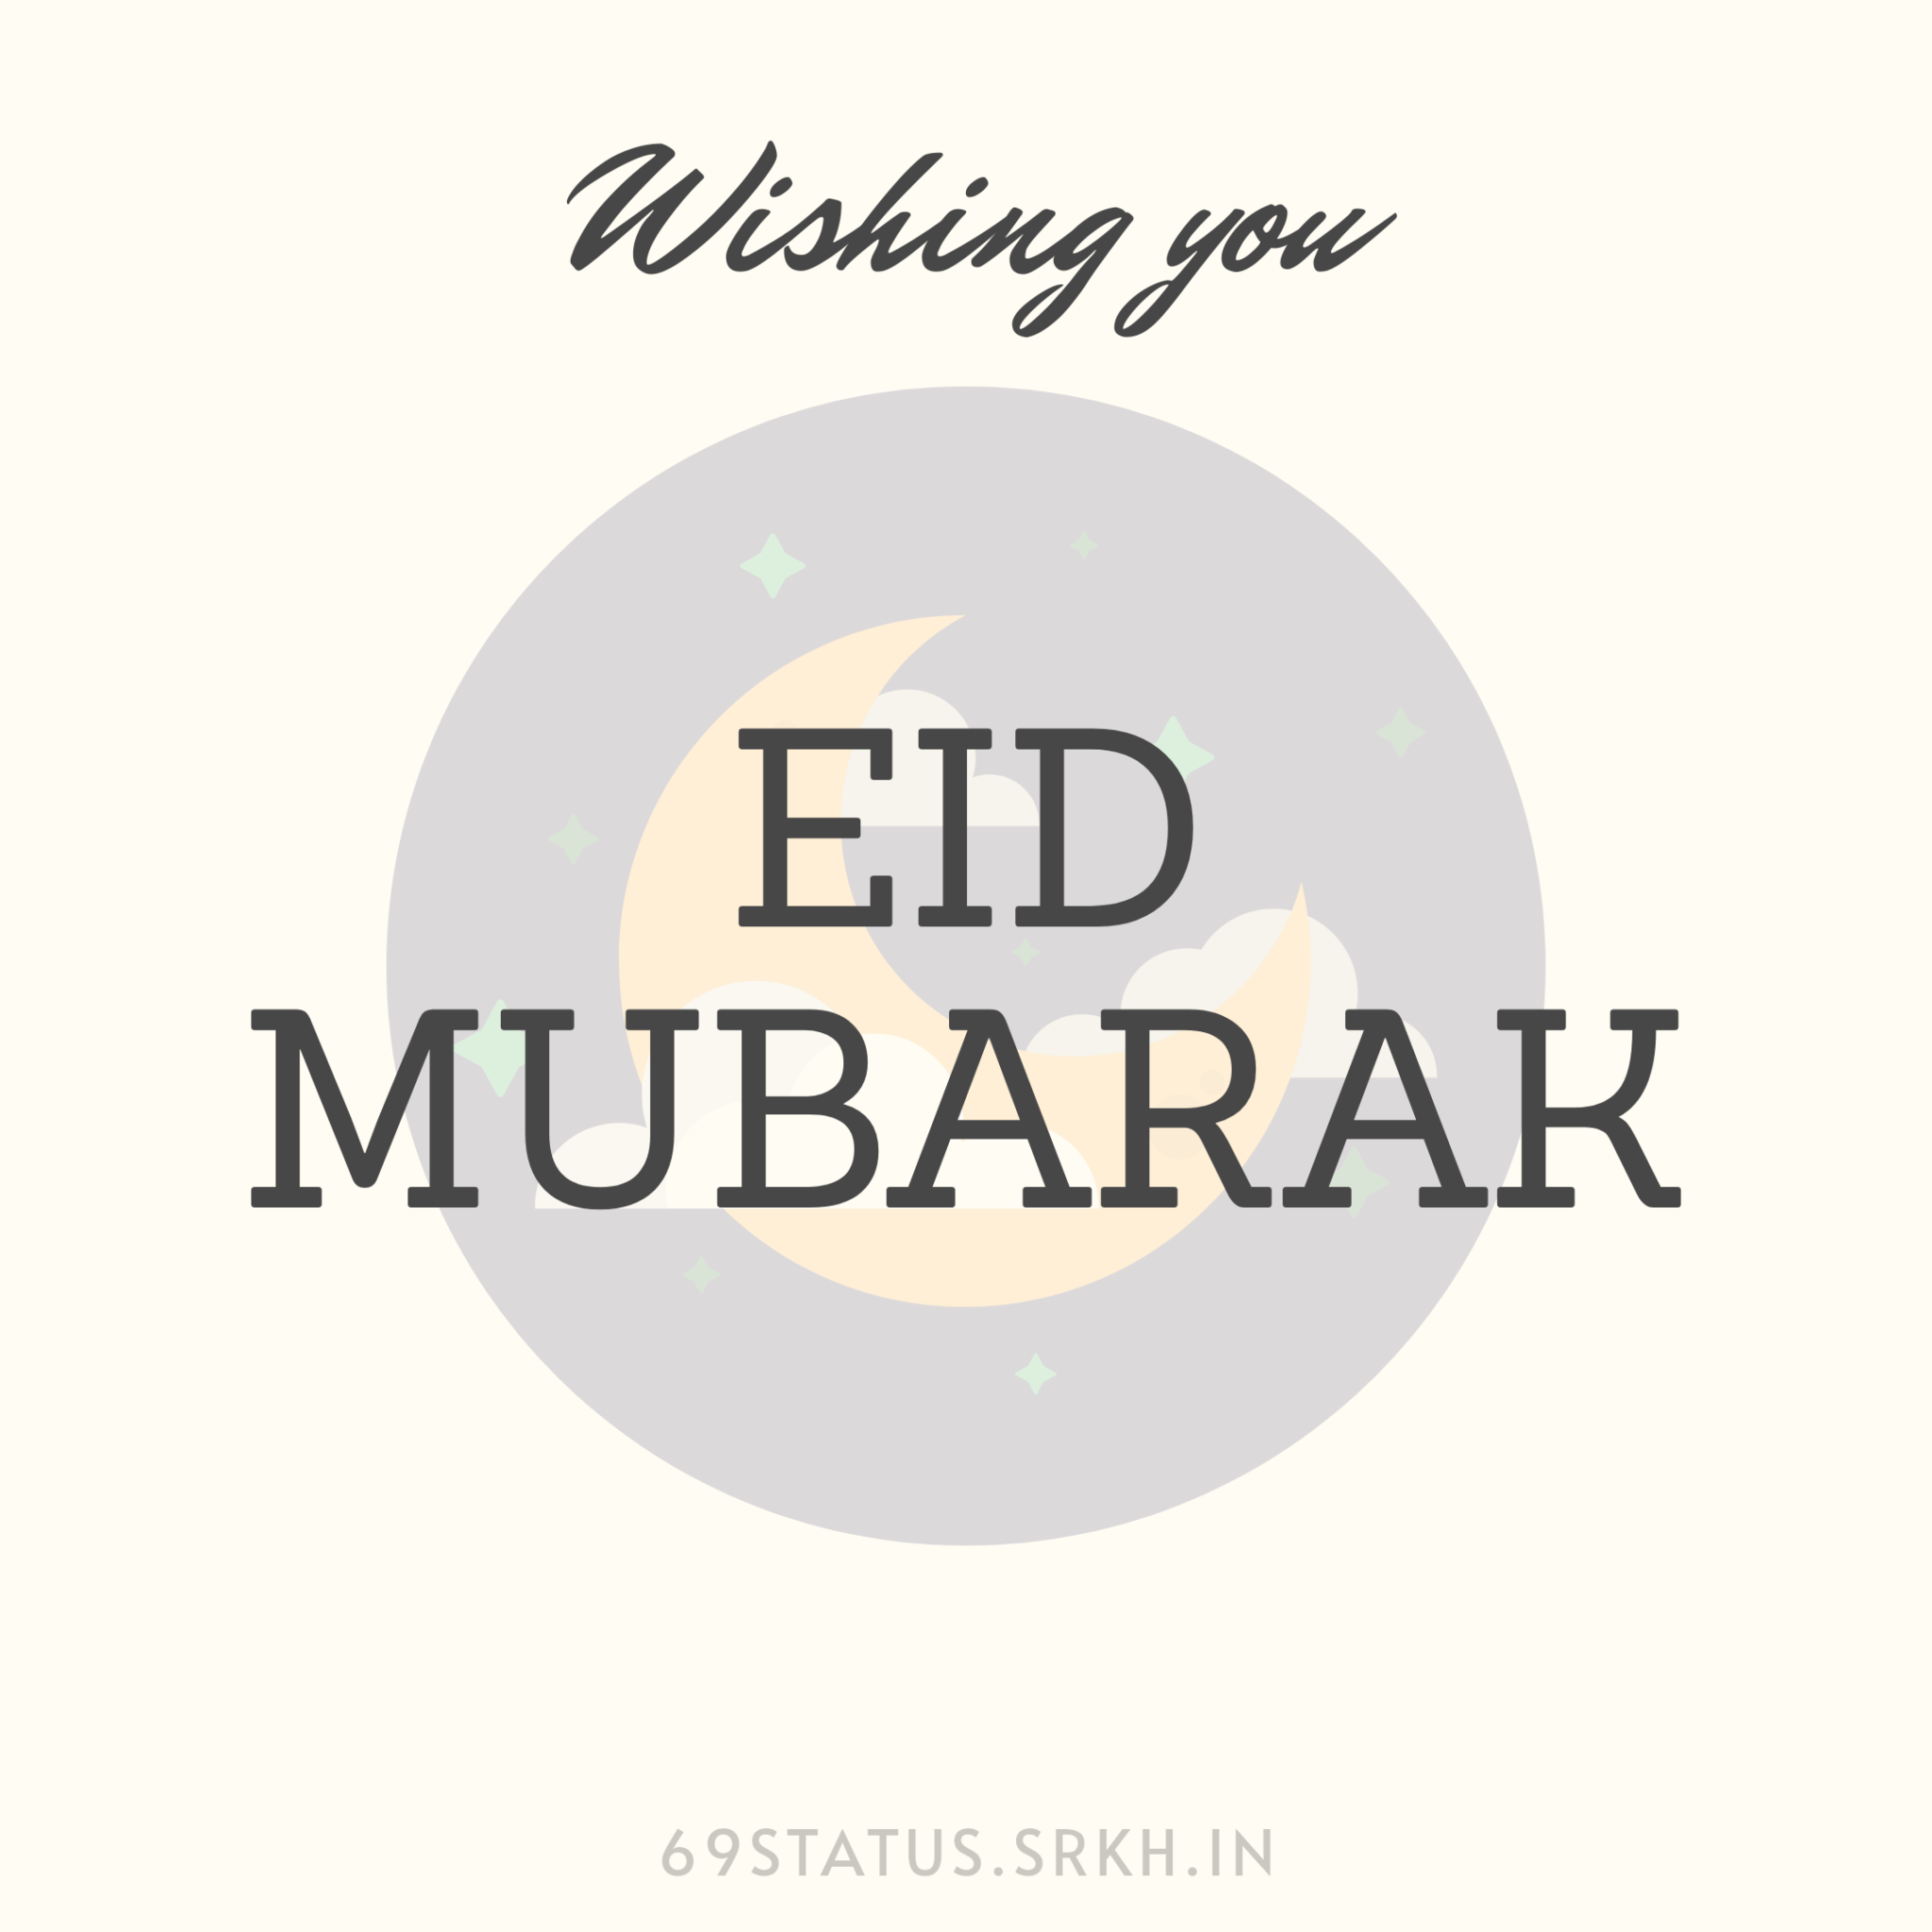 Wishing you Eid Mubarak pic